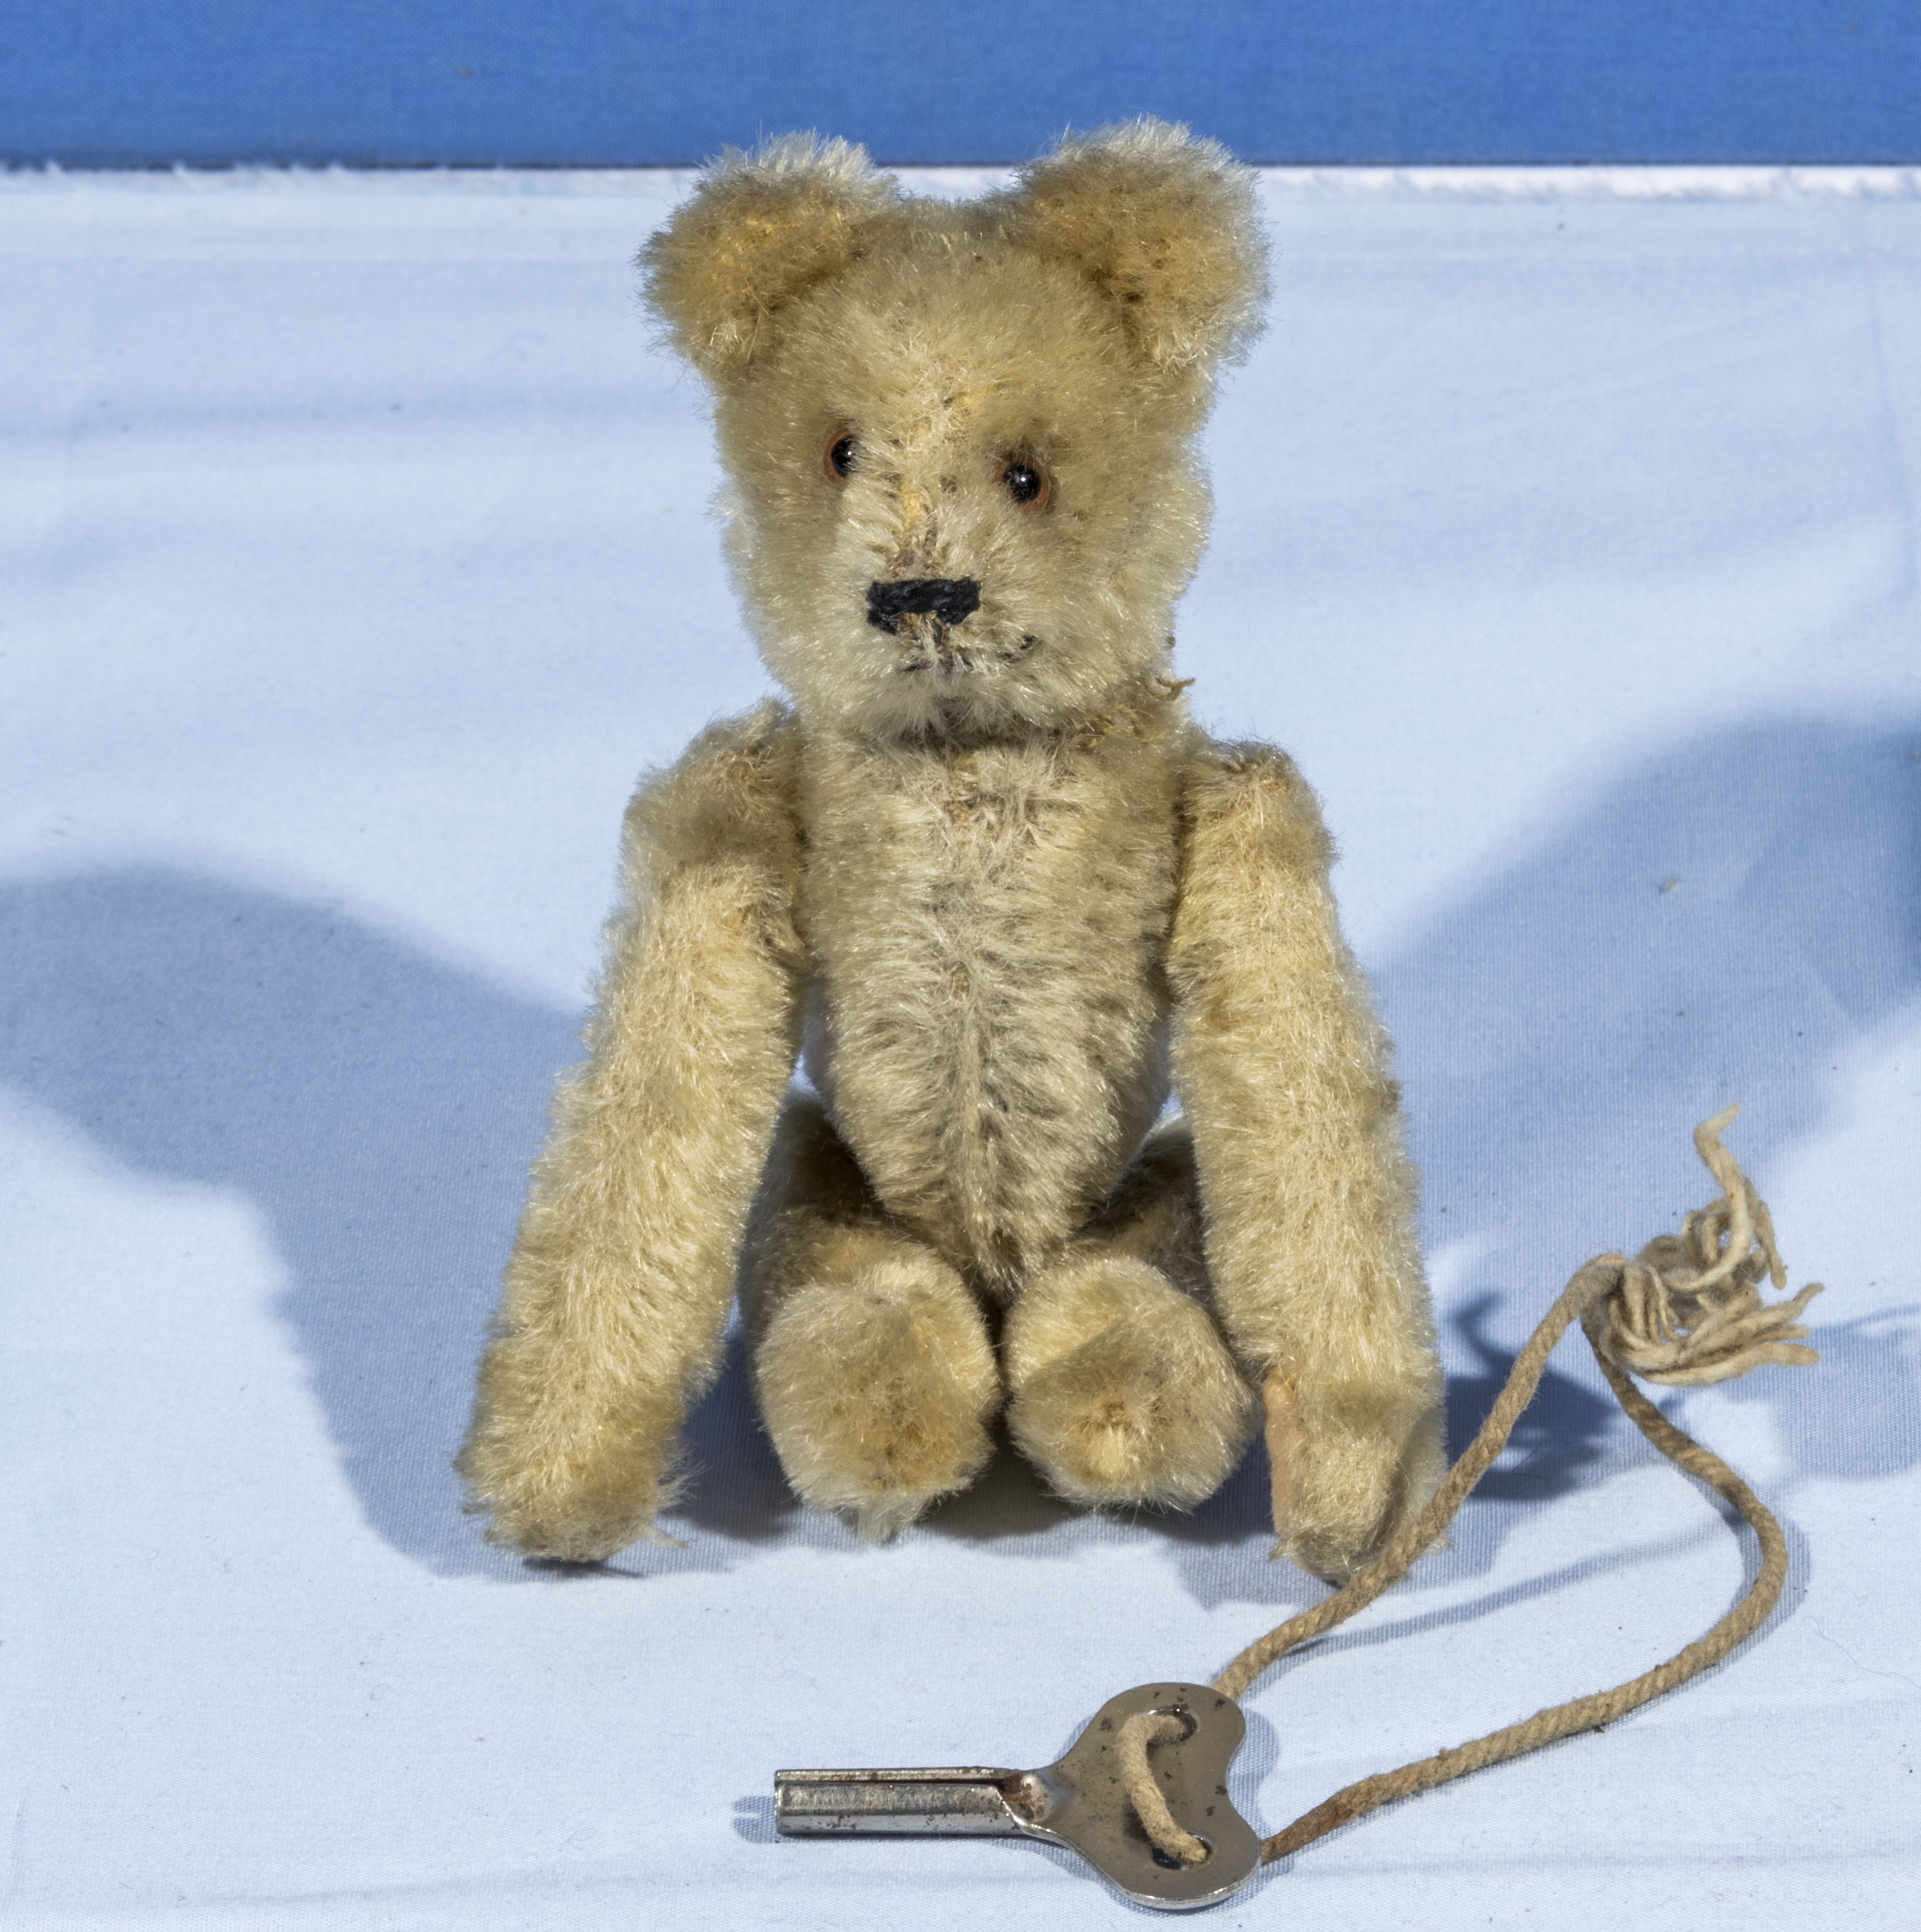 A small vintage mechanical teddy bear with key